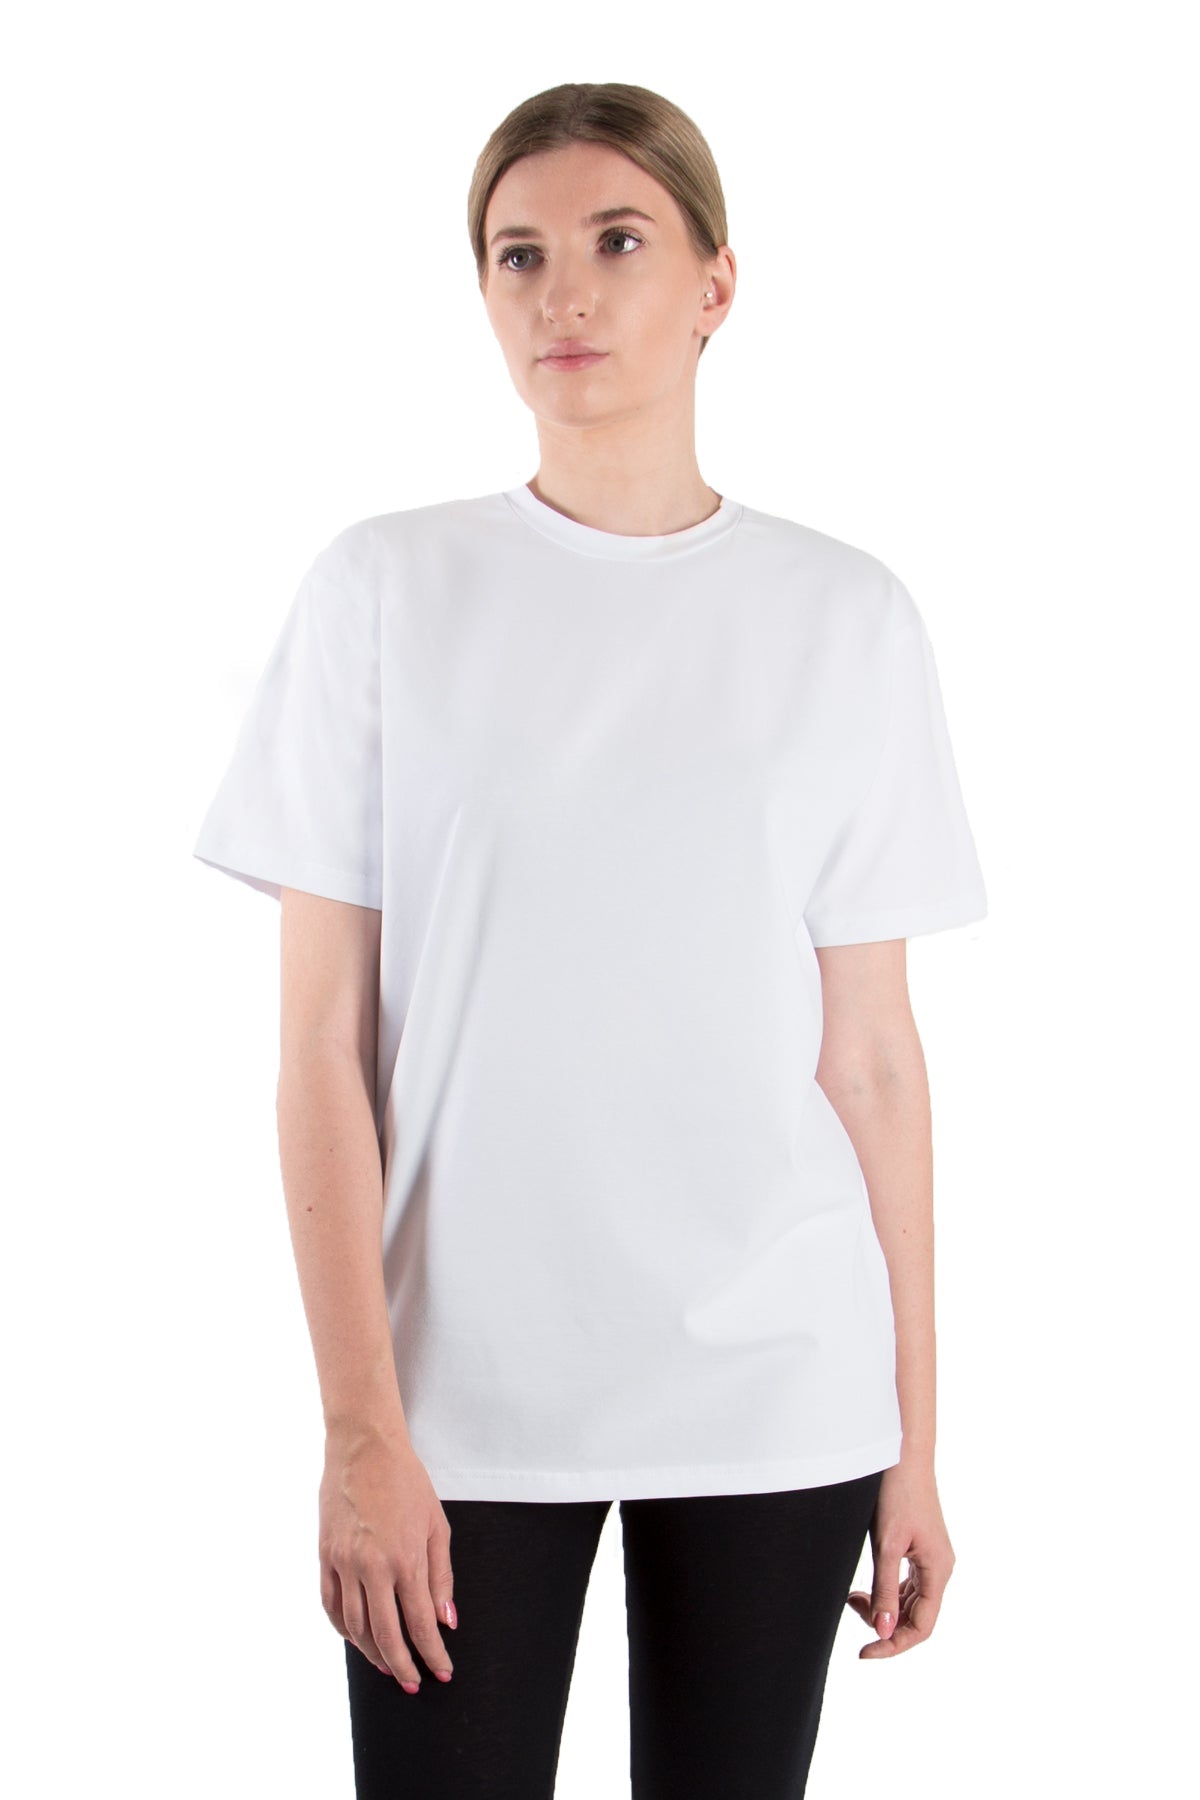 T-Shirt Rundhals (10er-Pack) - bordeaux